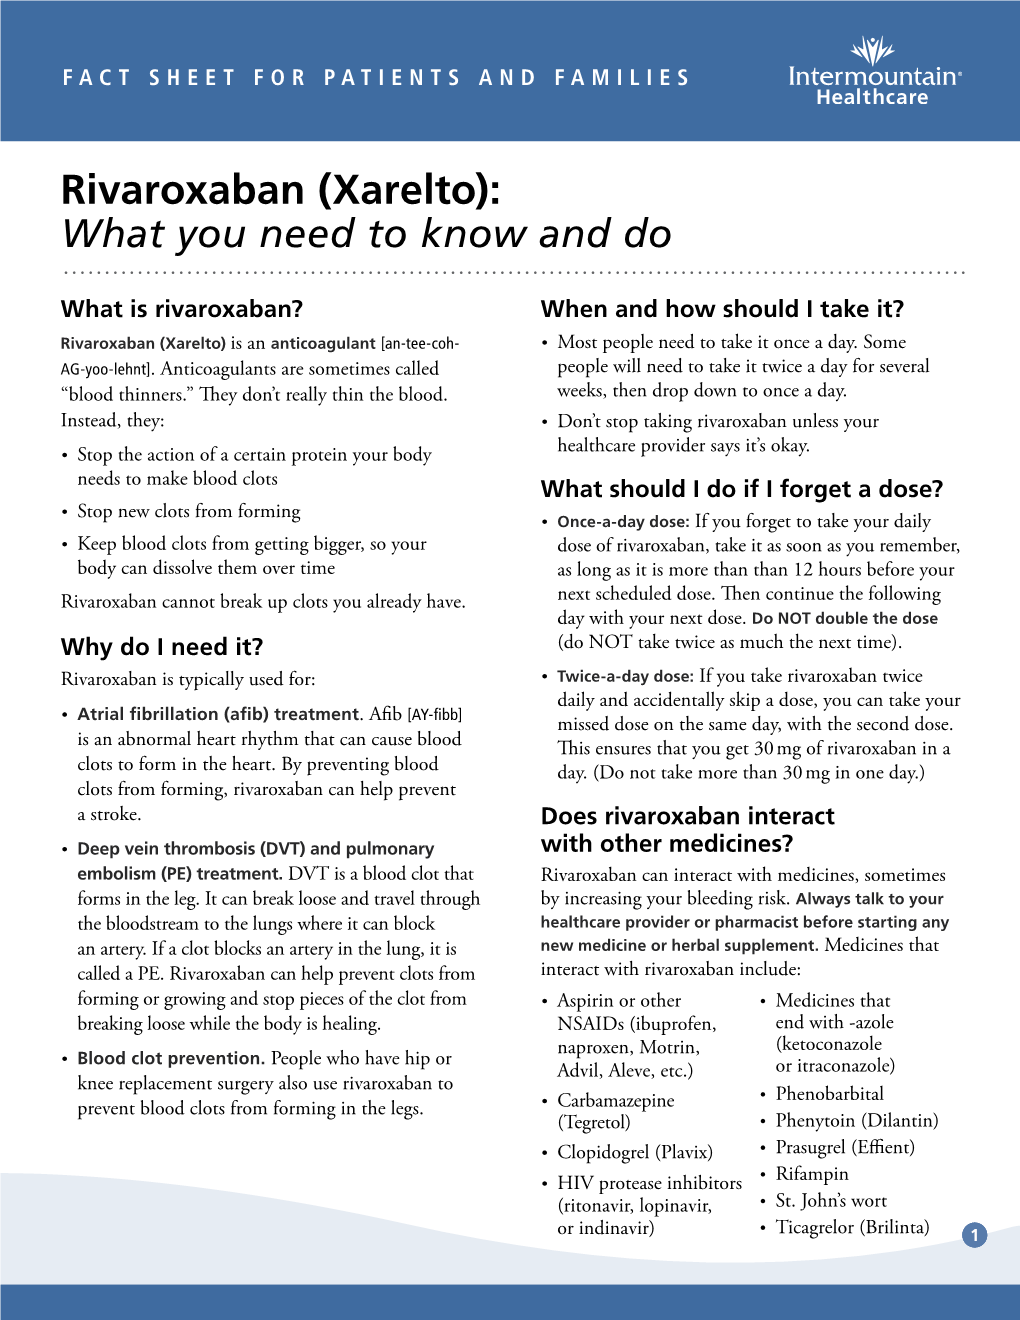 Rivaroxaban (Xarelto): What You Need to Know and Do